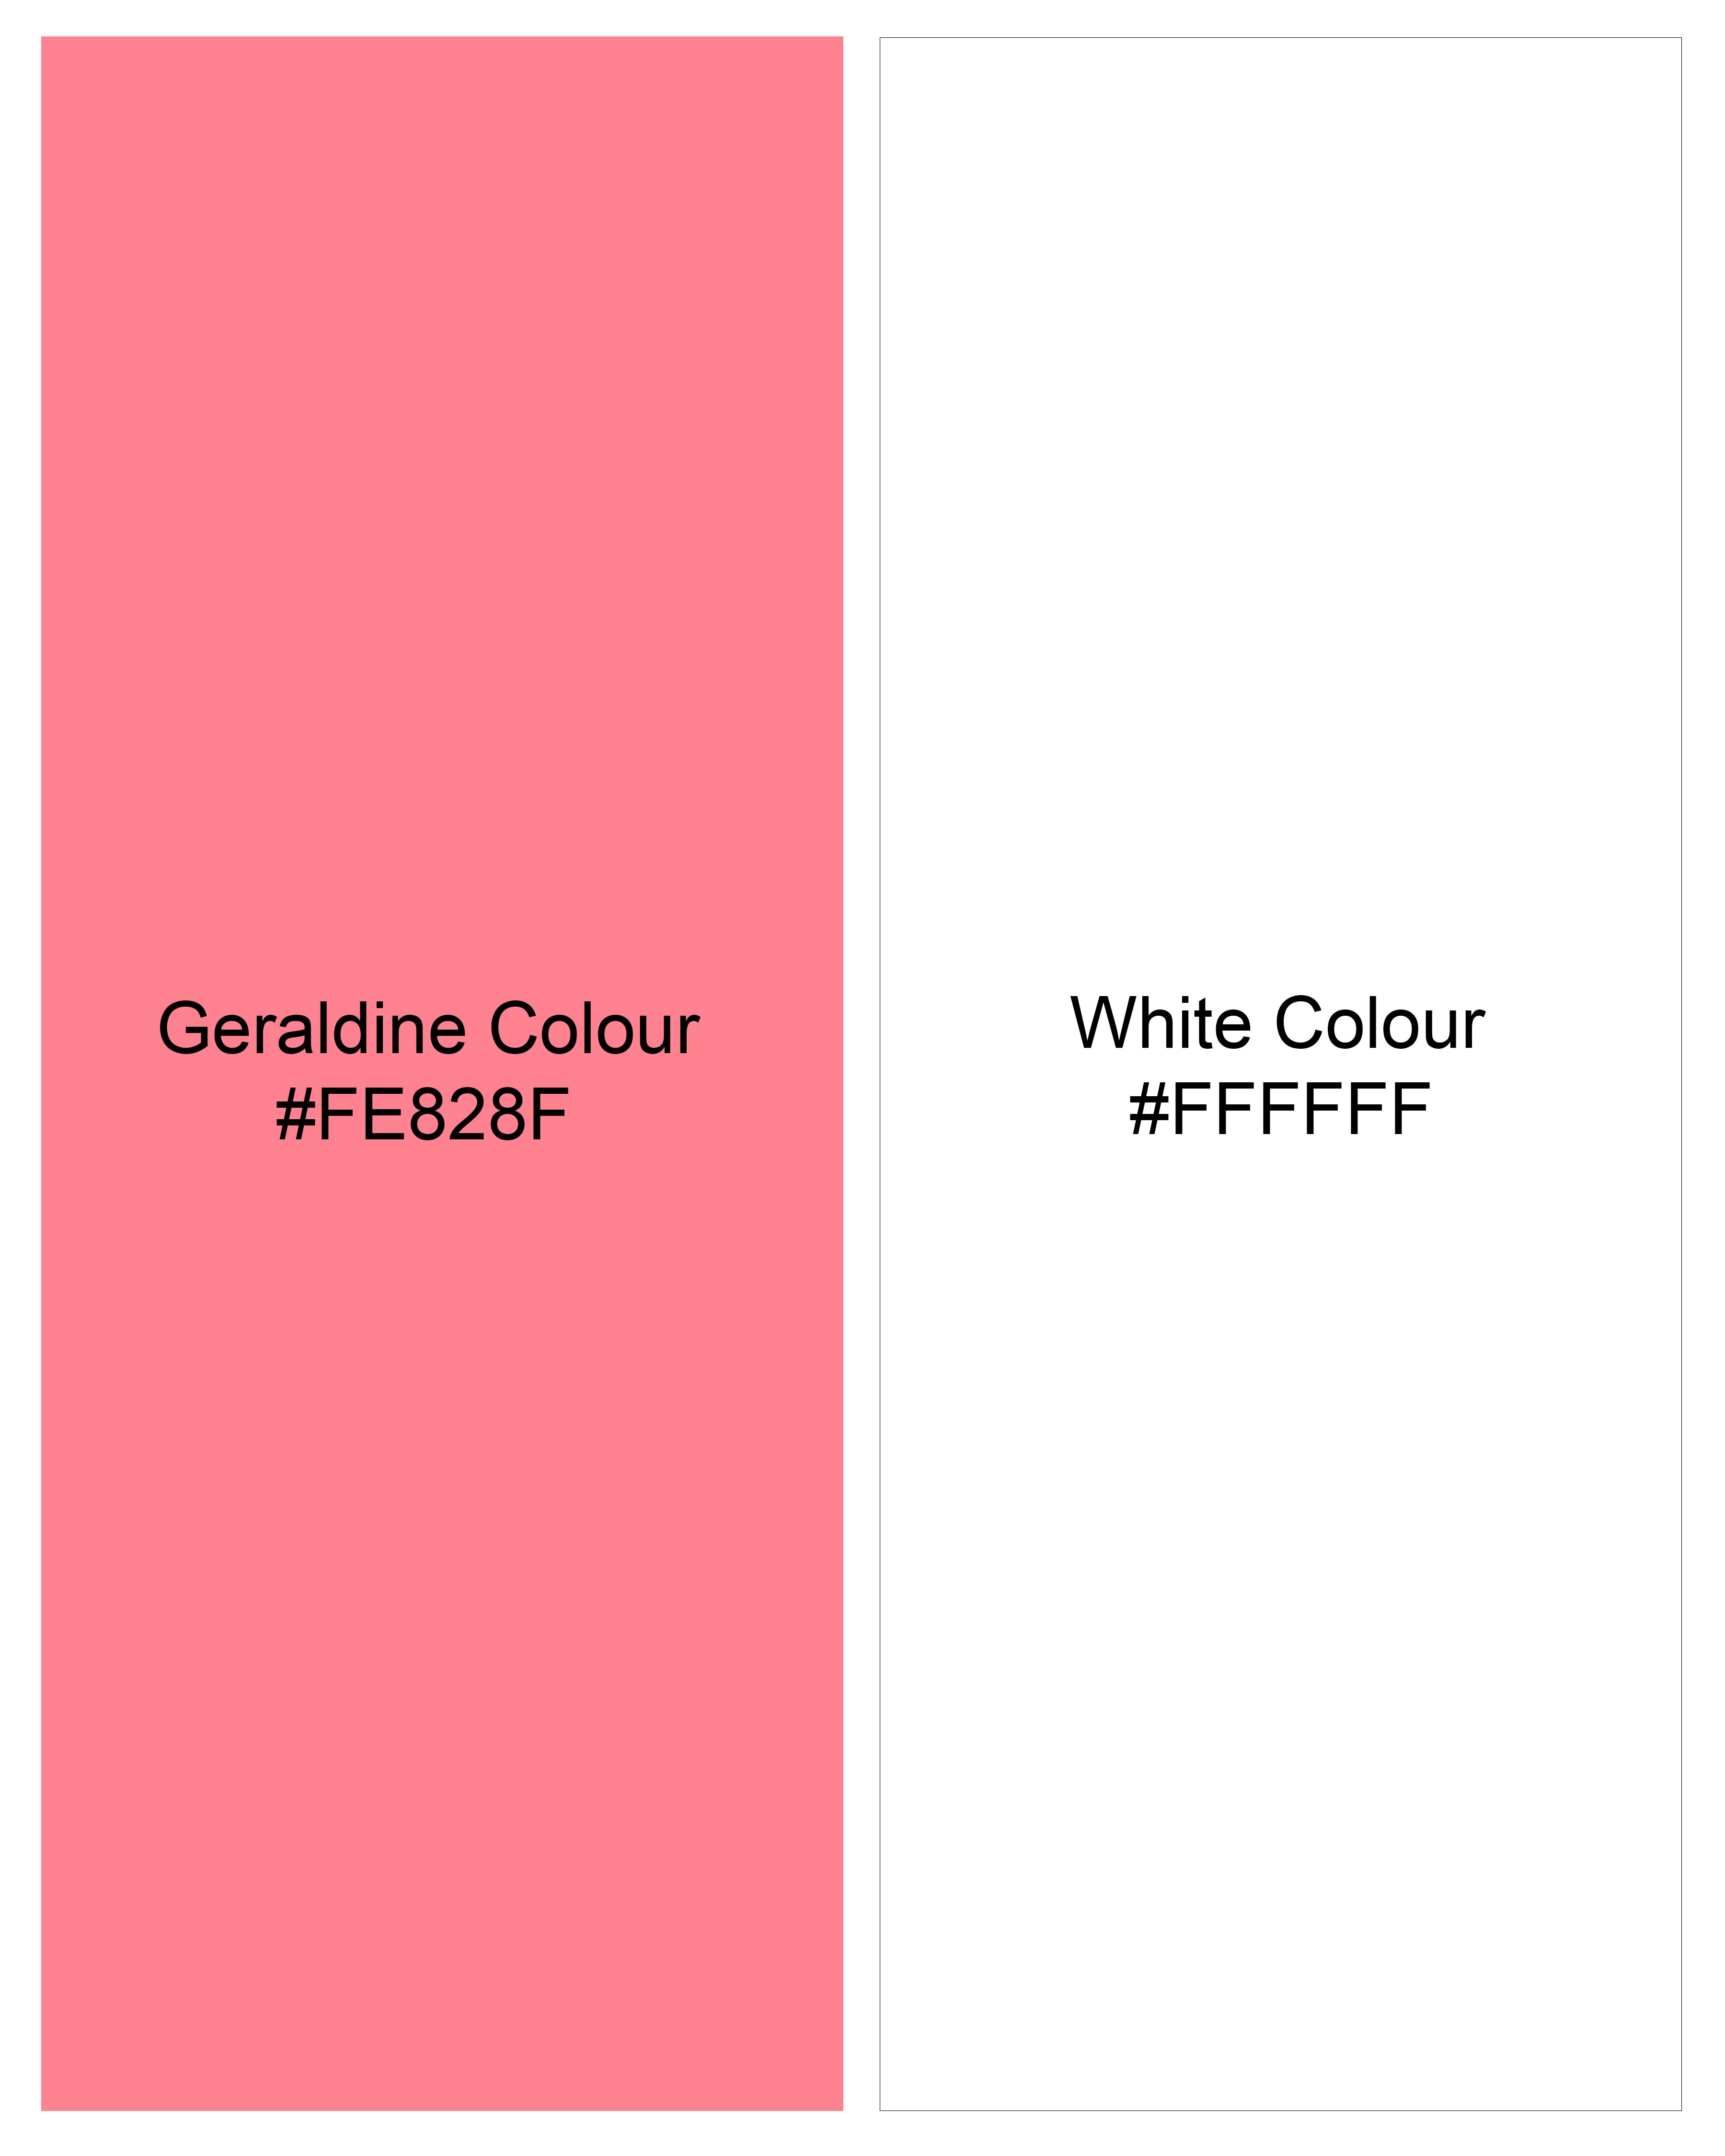 Geraldine Pink and White Striped Twill Premium Cotton Half Slavees Shirt 9645-M-BLK-SS-H-38, 9645-M-BLK-SS-H-39, 9645-M-BLK-SS-H-40, 9645-M-BLK-SS-H-42, 9645-M-BLK-SS-H-44, 9645-M-BLK-SS-H-46, 9645-M-BLK-SS-H-48, 9645-M-BLK-SS-H-50, 9645-M-BLK-SS-H-52